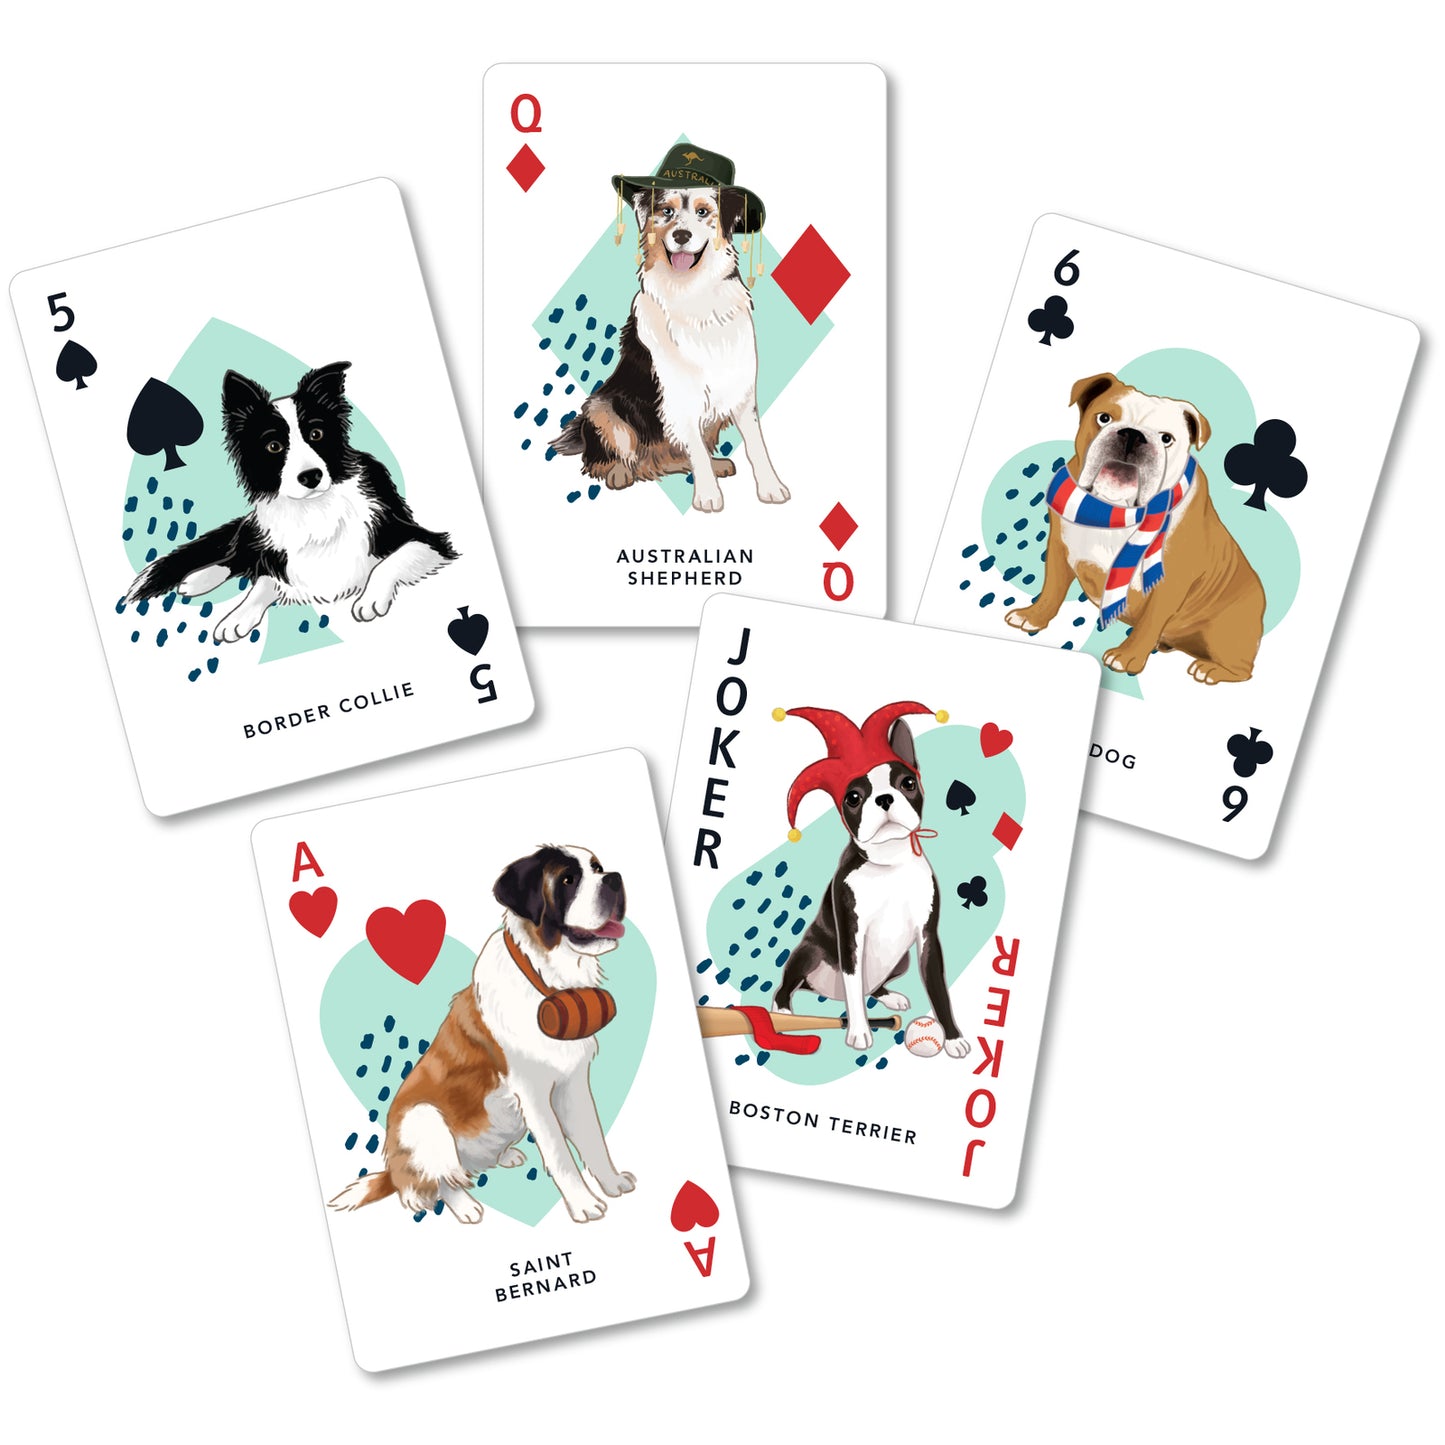 Casino Playing Cards - Top Dog - Deb's Hidden Treasures